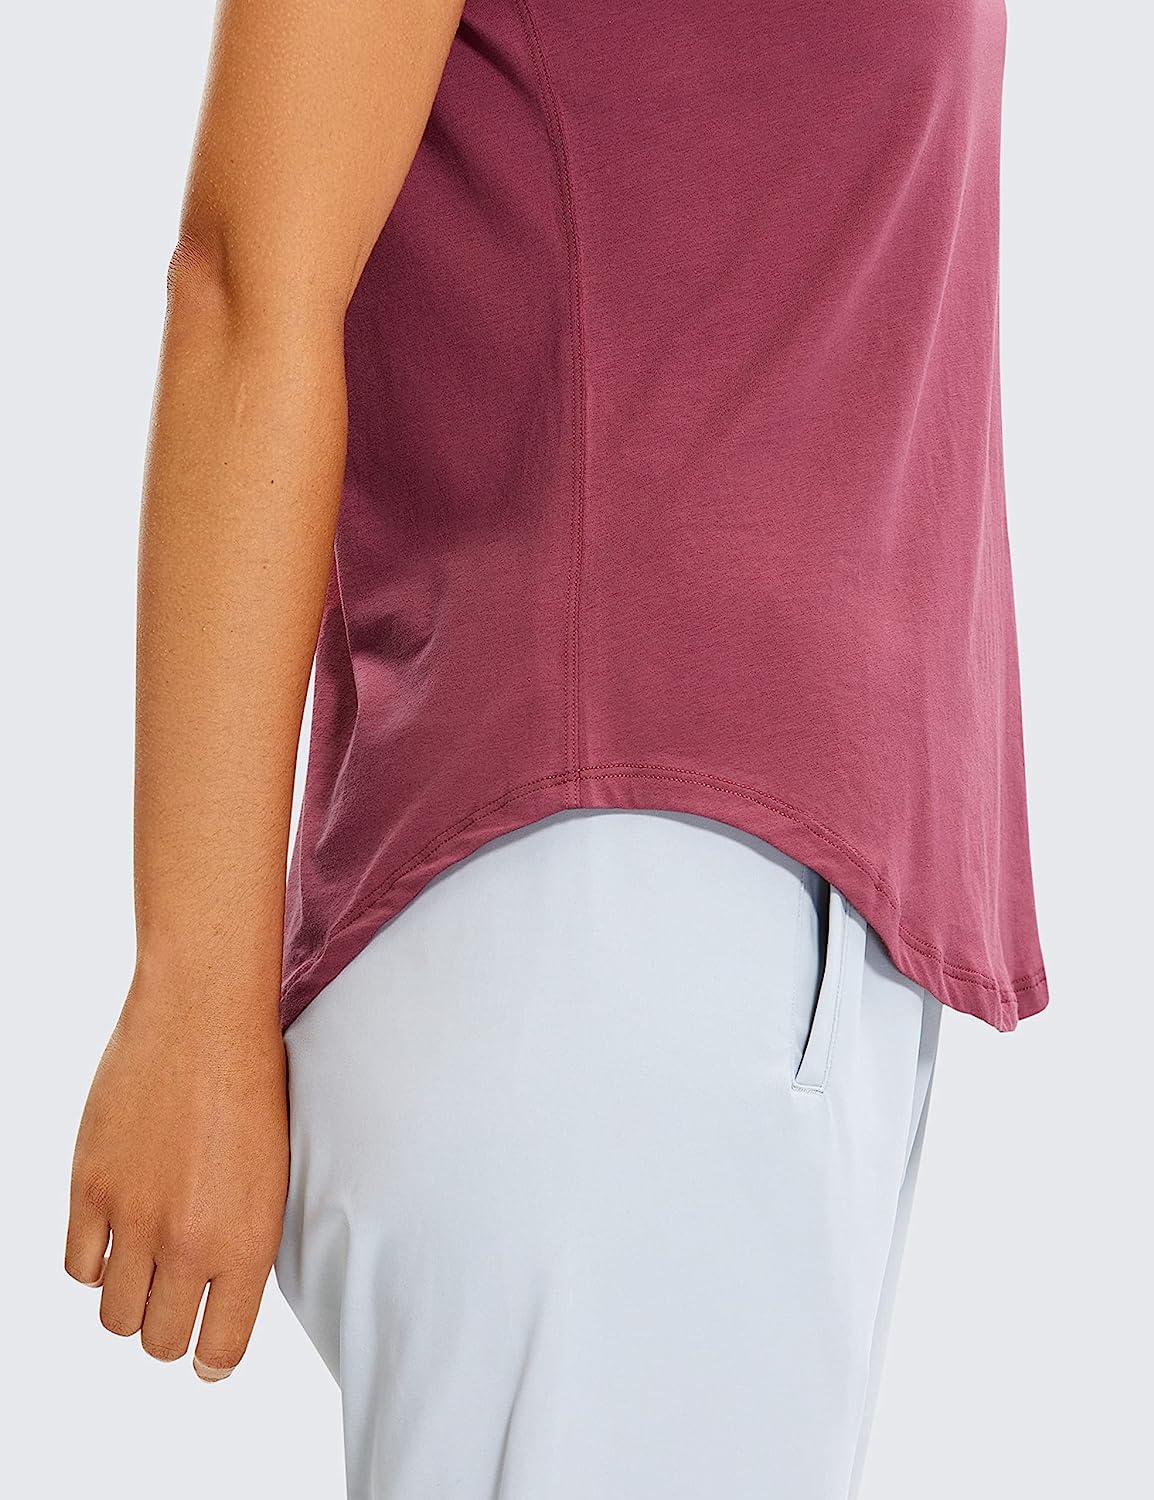 CRZ YOGA Women's Pima Cotton Short Sleeve Workout Shirt Yoga T-shirt  Athletic Tee Top